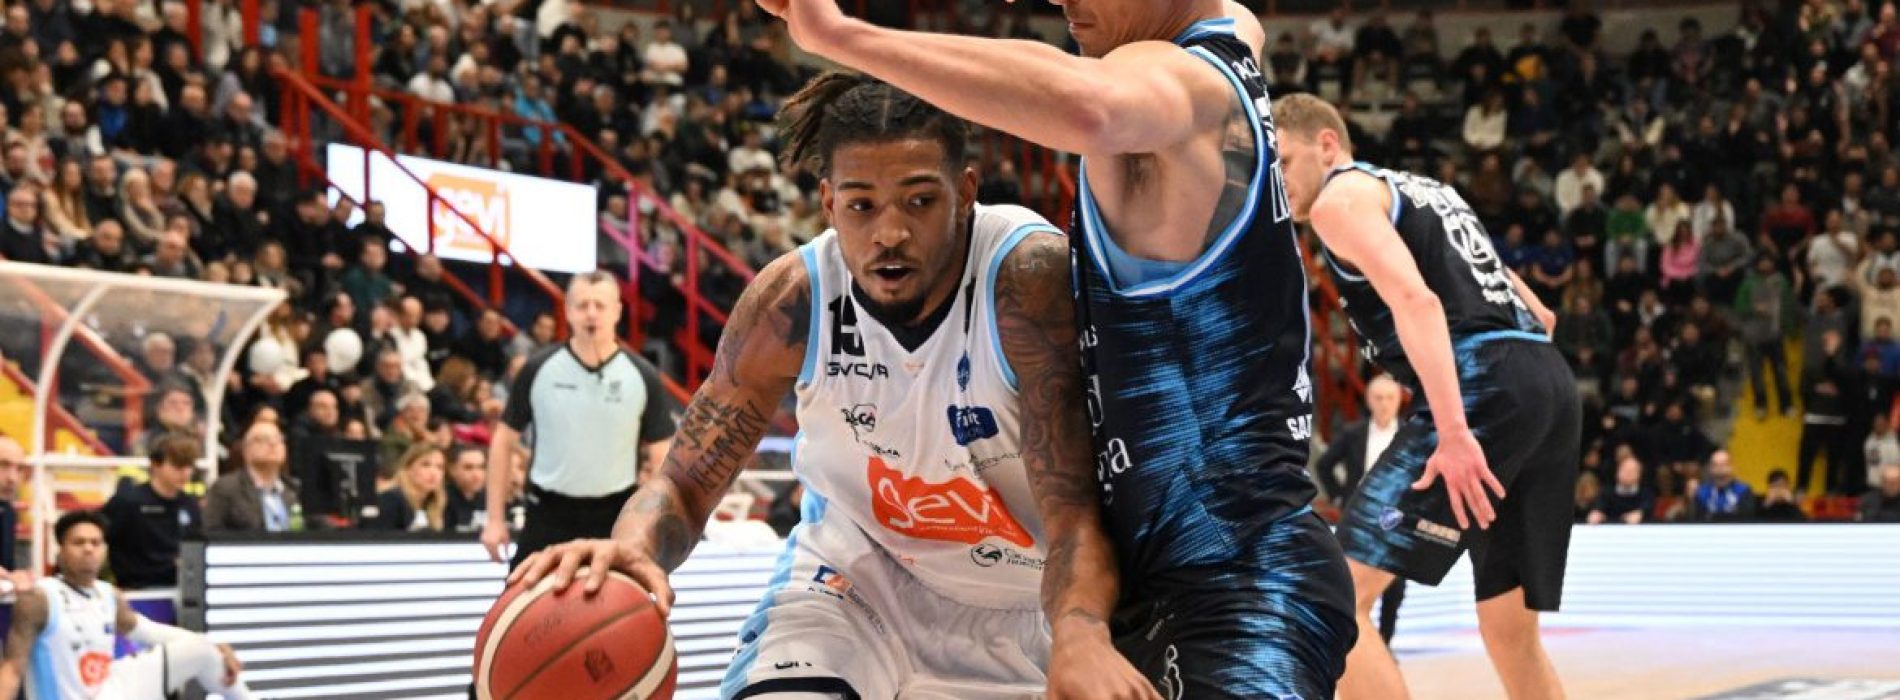 Gevi Napoli Basket, altra grande prova al Palabarbuto: battuto il Banco di Sardegna Sassari